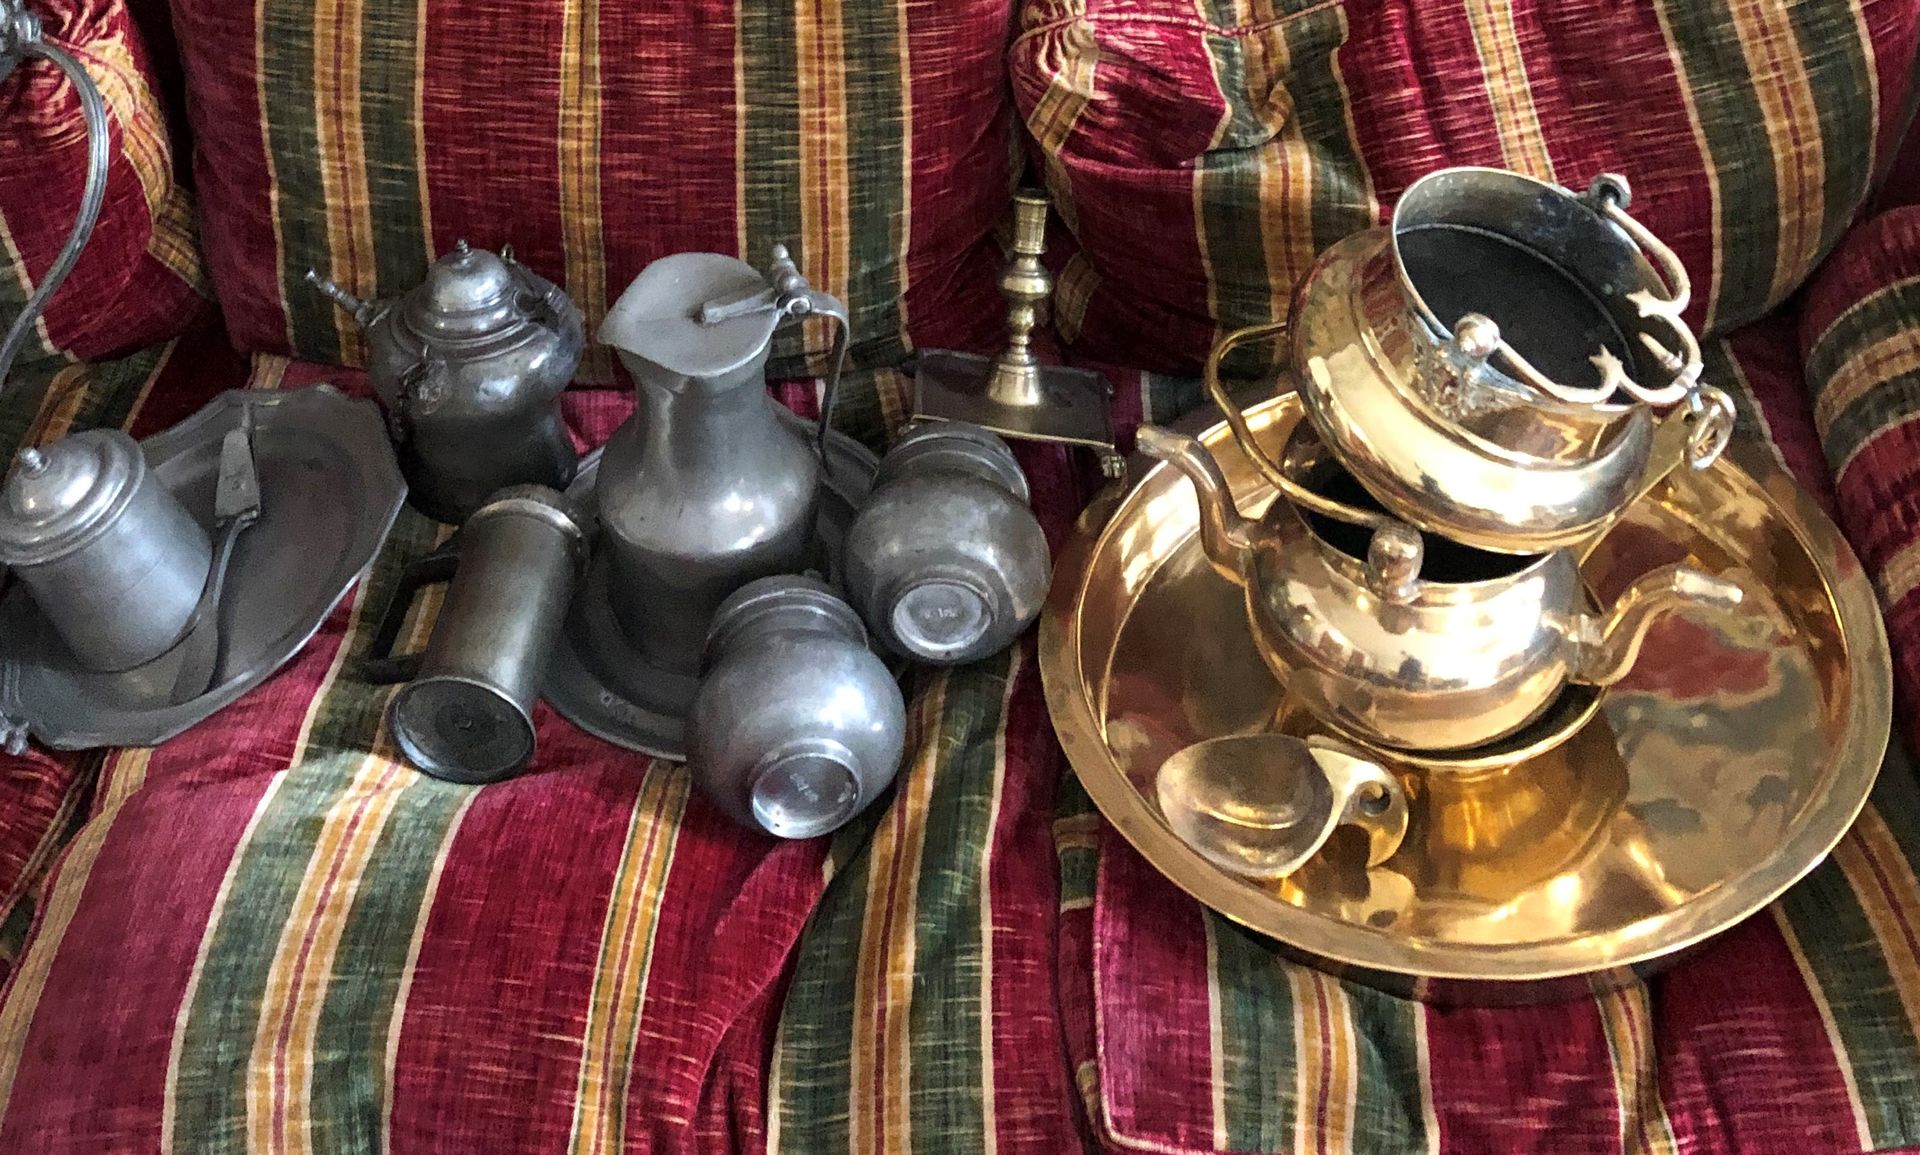 Null 锡镴和镀金铜器的手柄，包括盘子、碟子、水壶、壶和其他物品。